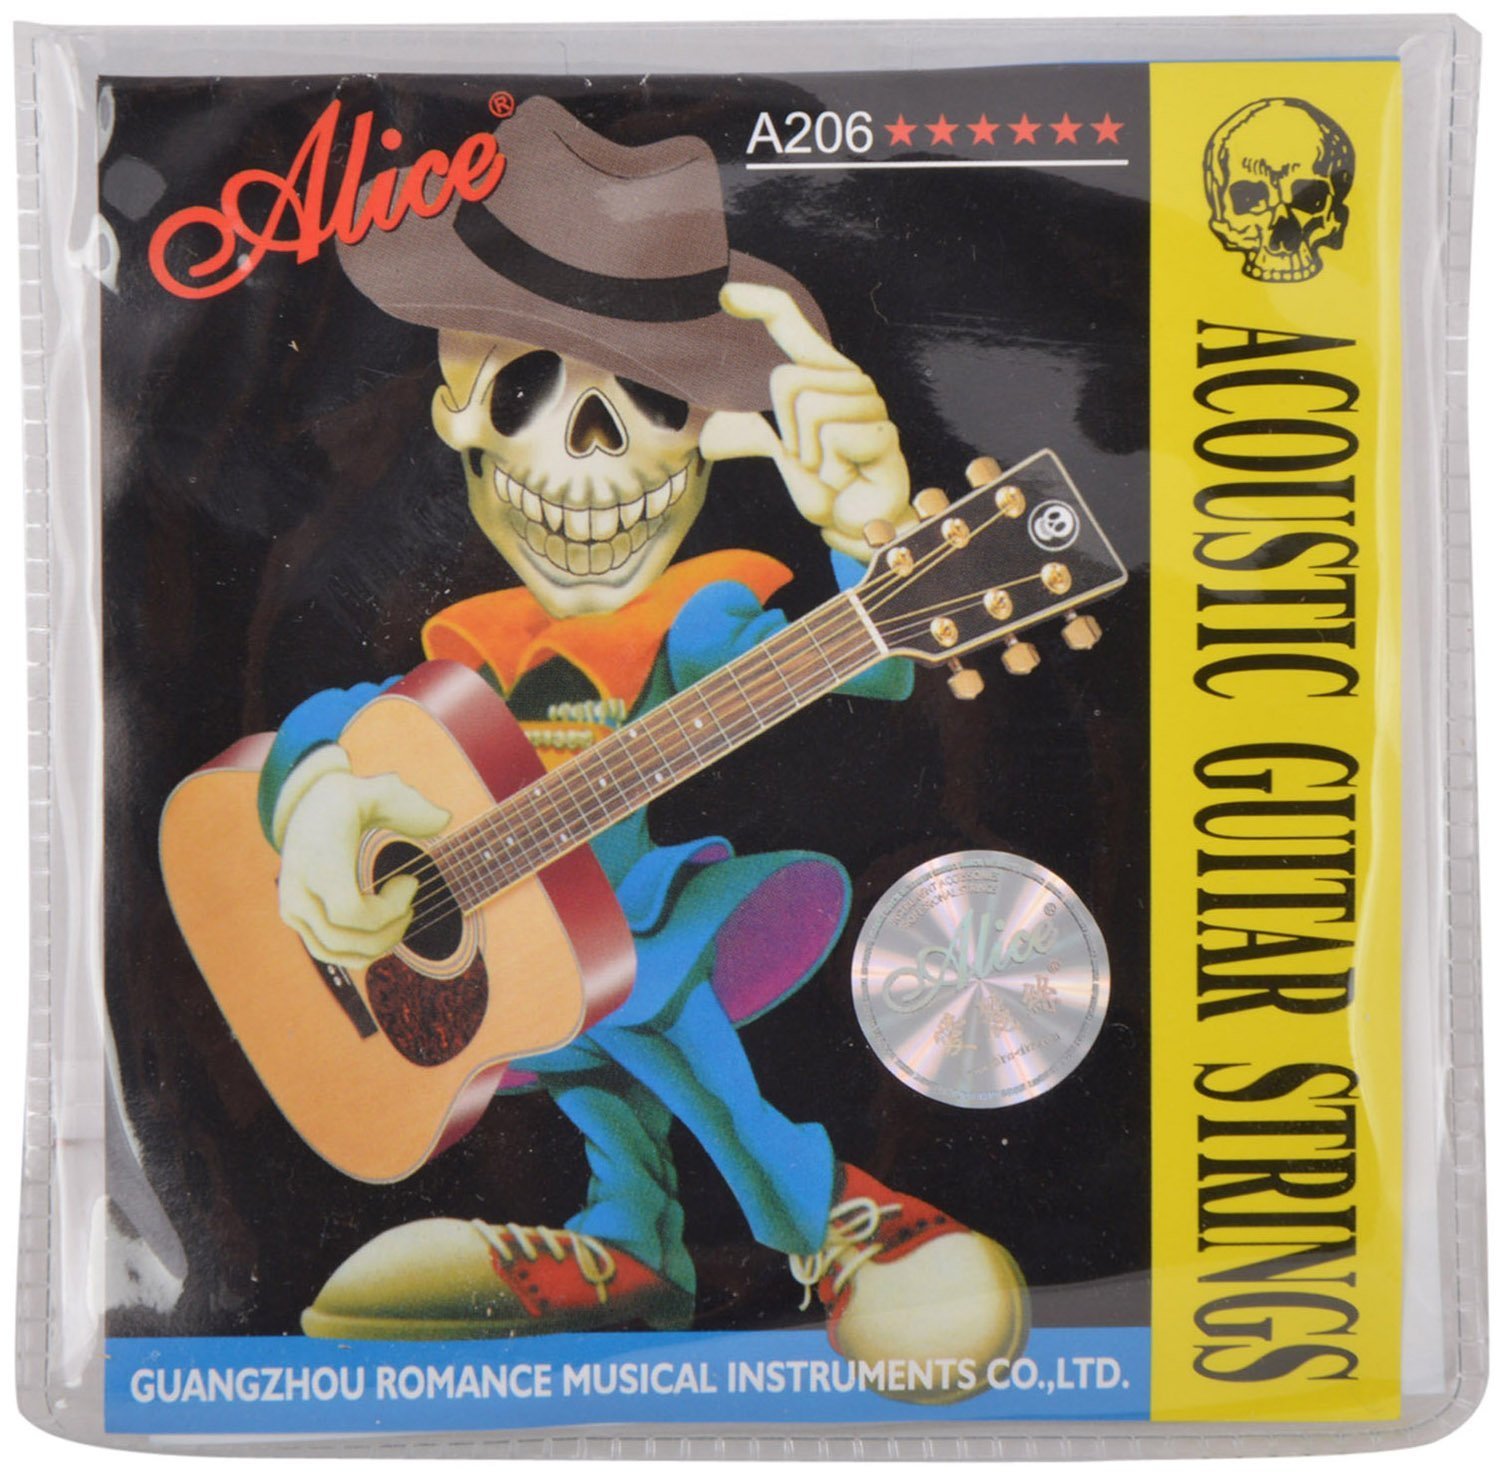 Alice Acoustic Guitar Strings online price in india